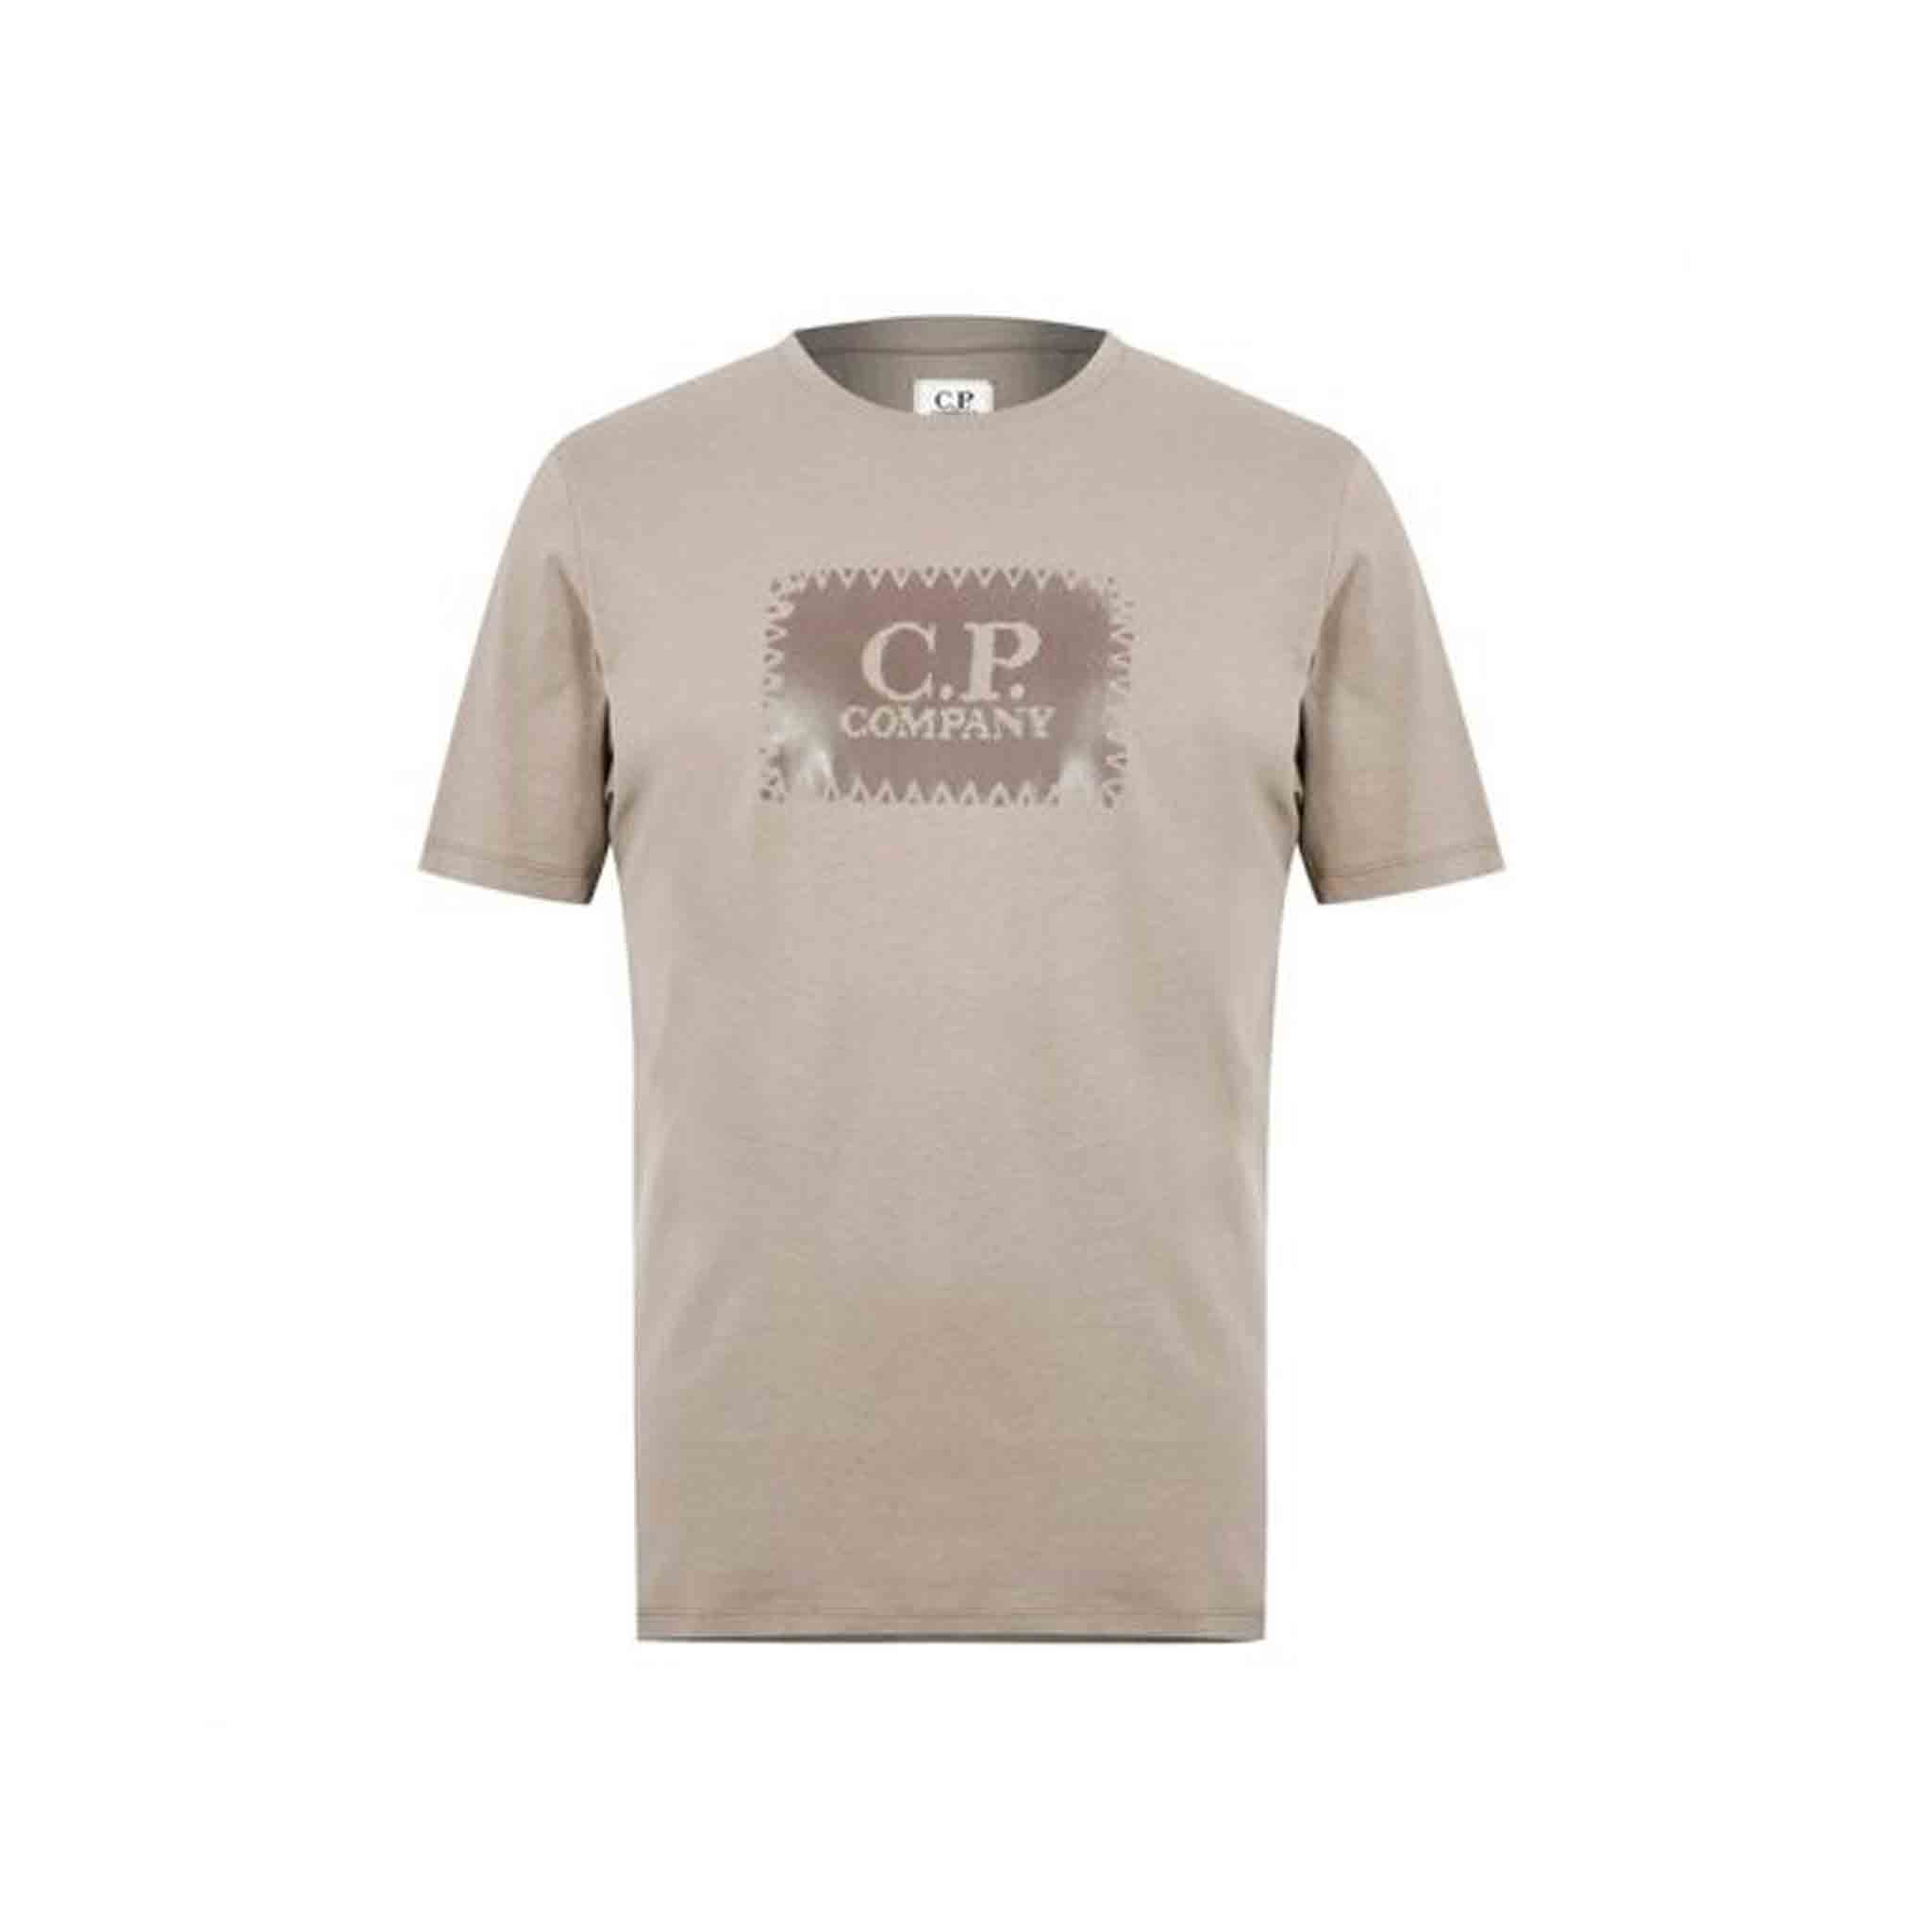 C.P. Company 30/1 Jersey Box Logo T-shirt in Cobblestone